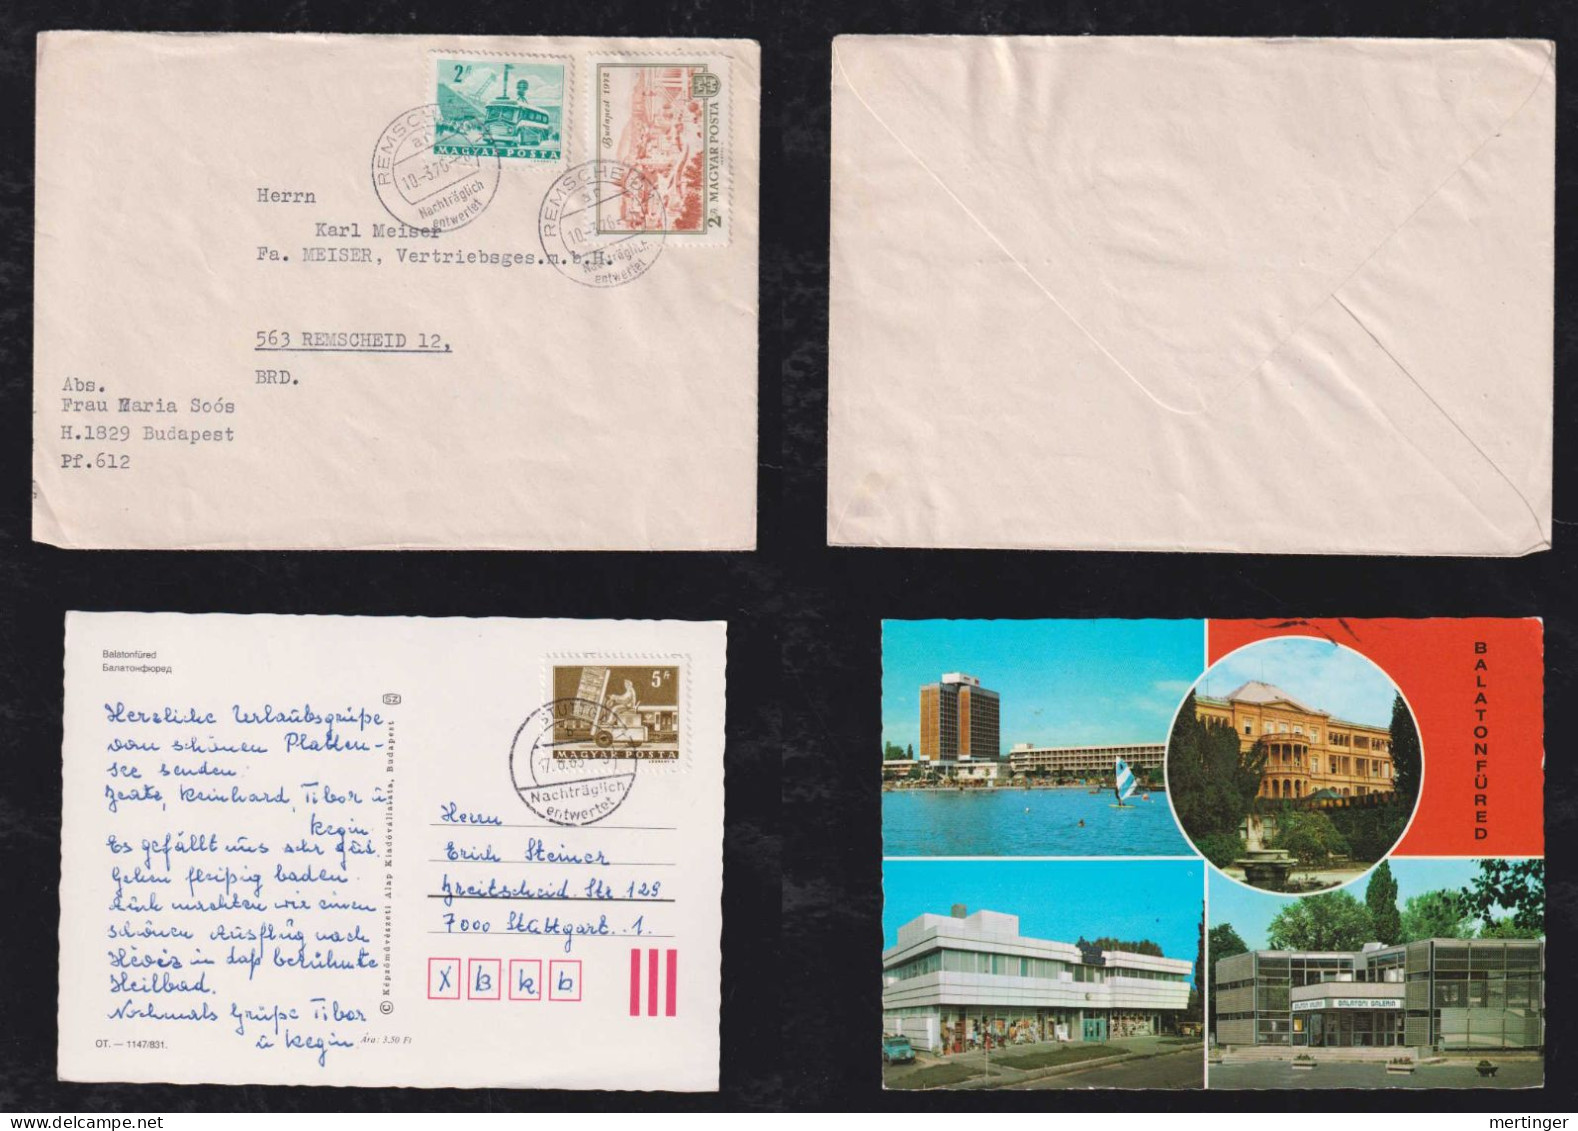 Ungarn Hungary 1976 + 1983 Cover + Postcard Nachträglich Entwertet Stuttgart + Remscheid - Covers & Documents